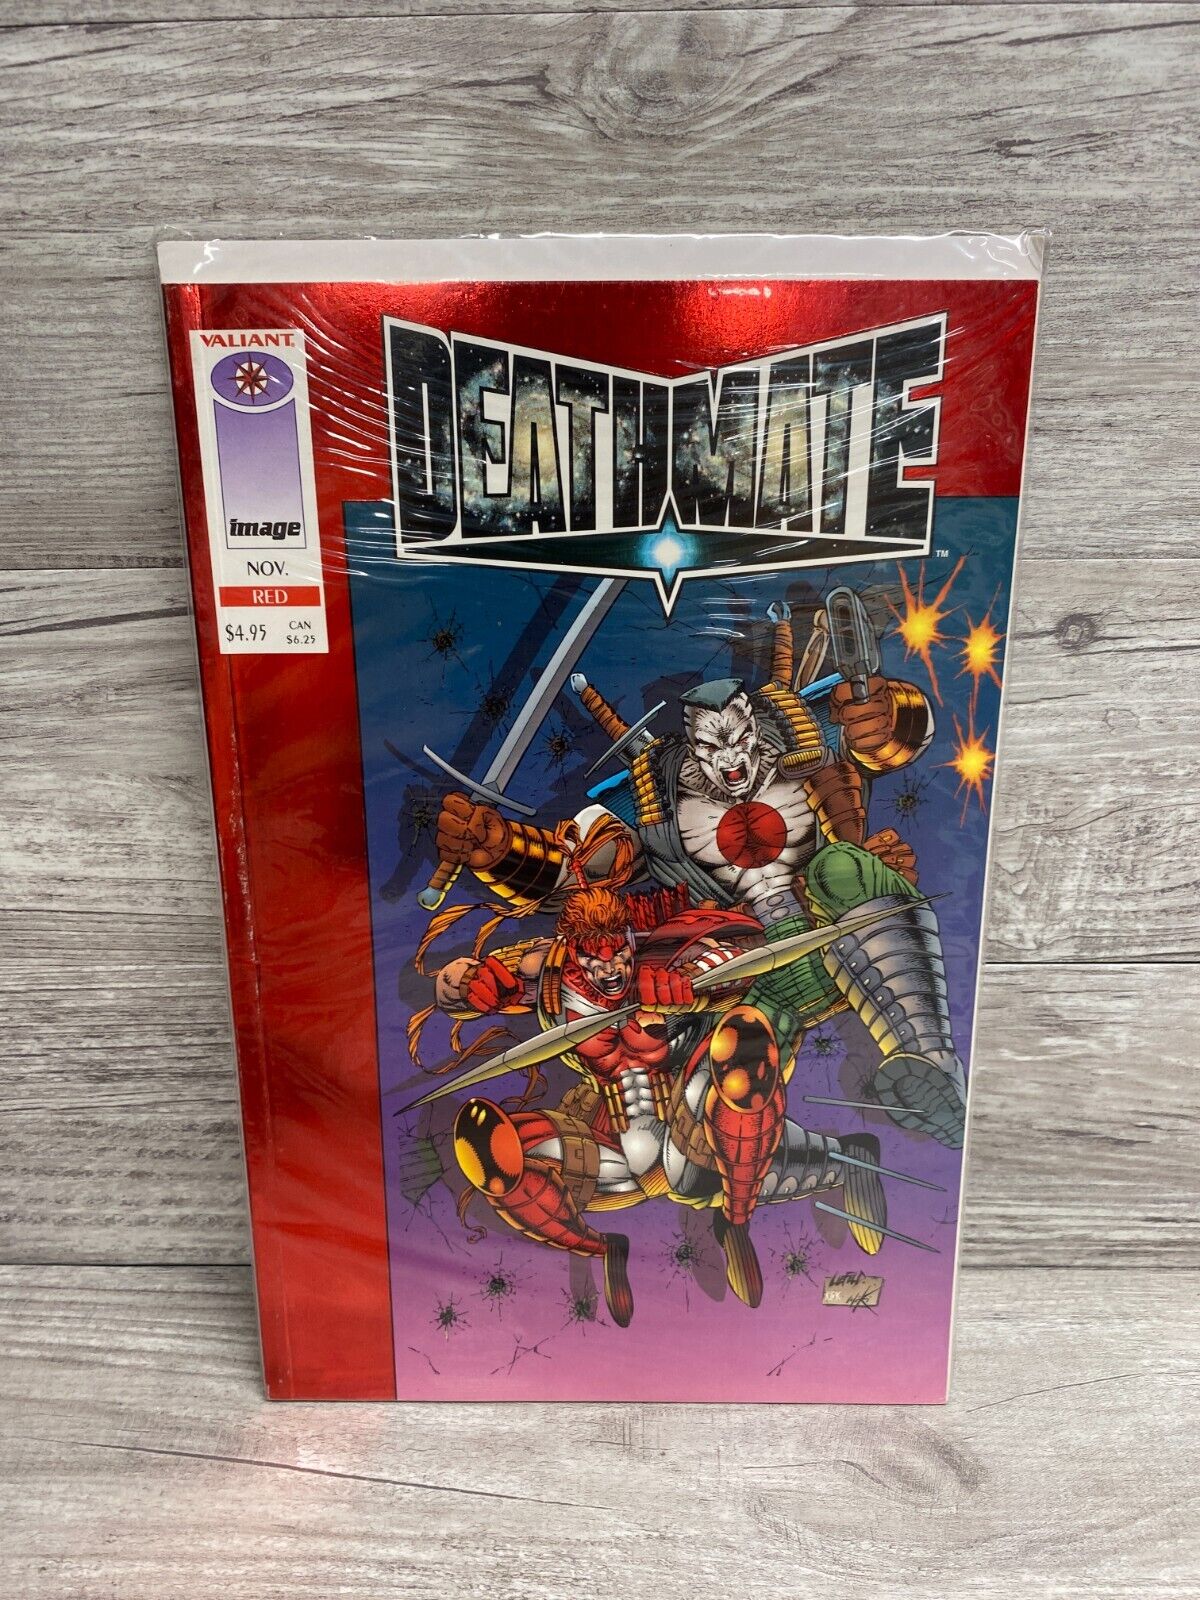 Valiant Image Comics Deathmate Red November 1993Comic Book